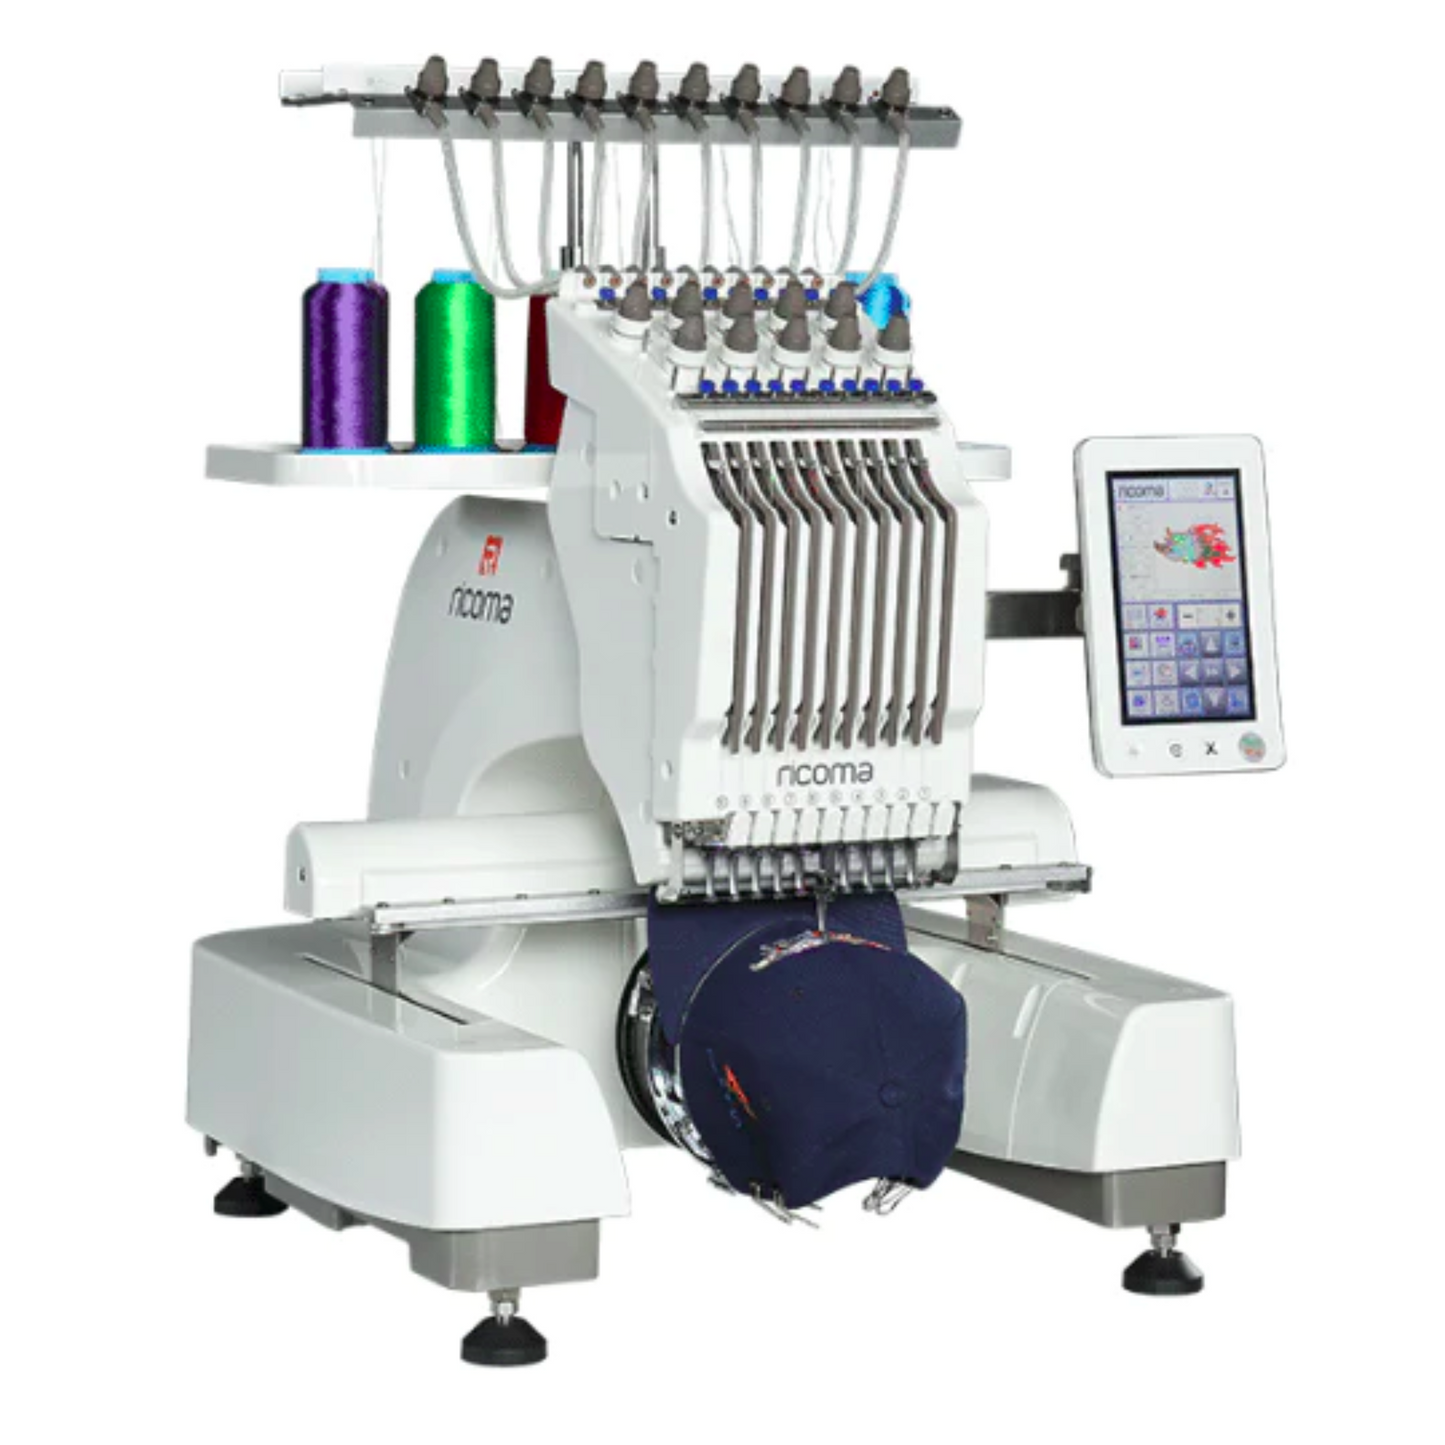 Ricoma EM1010 embroidery sewing machine